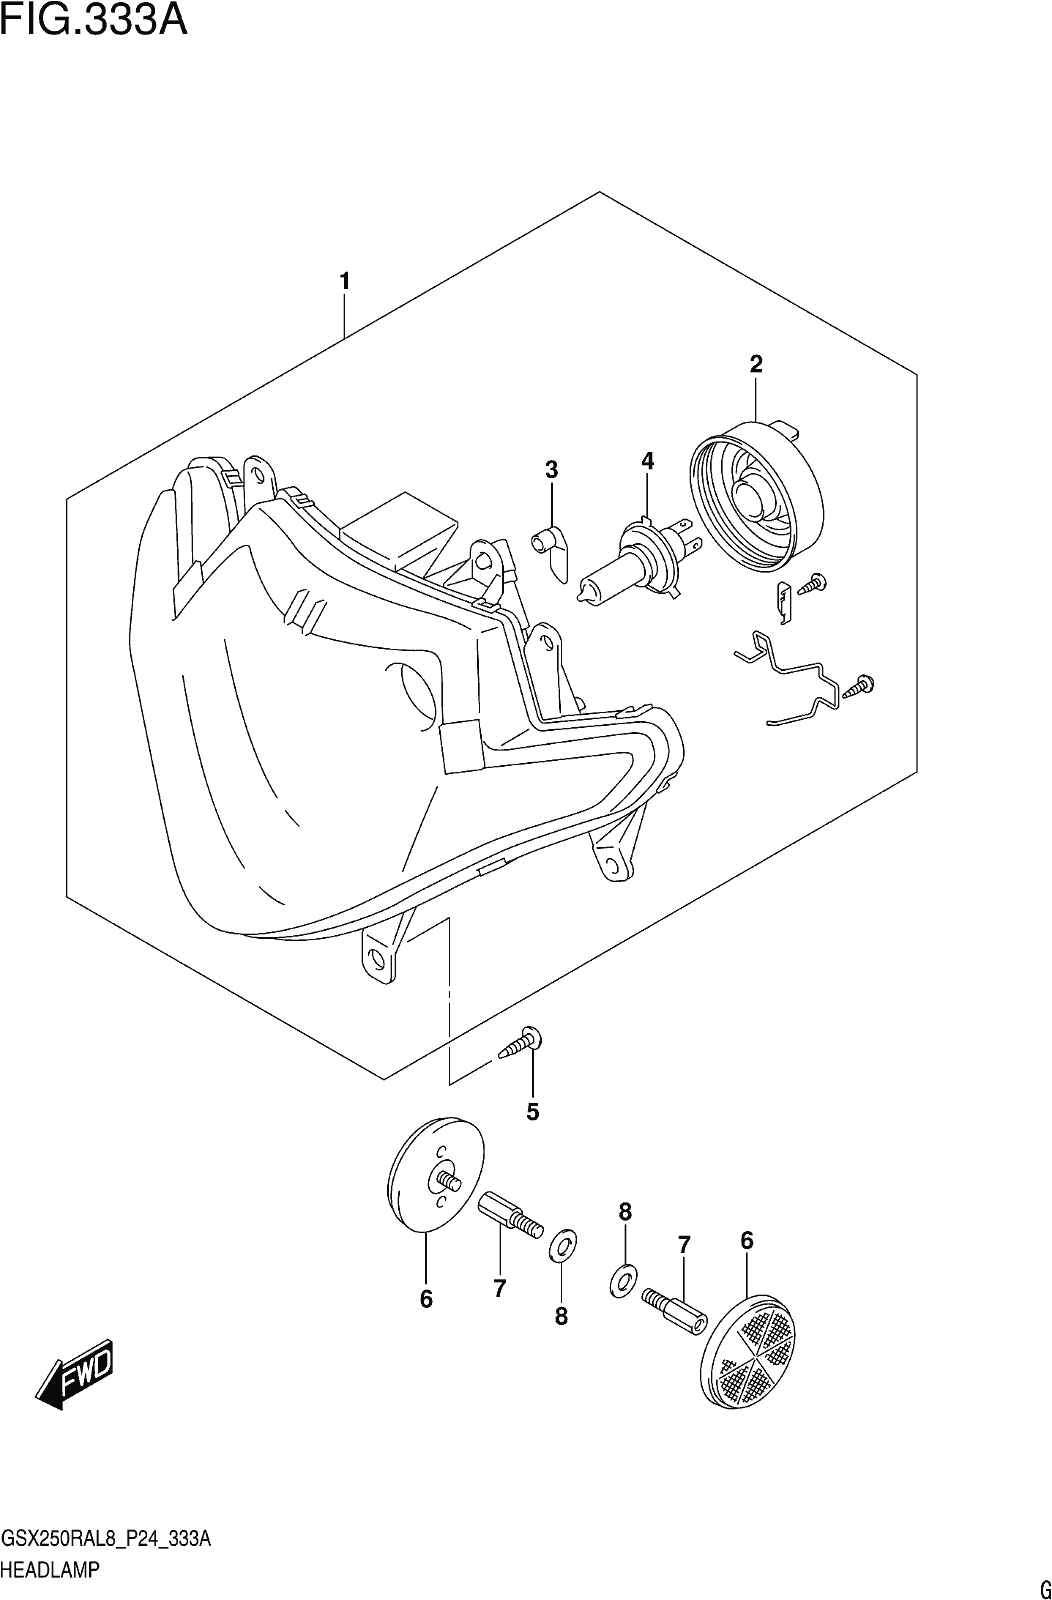 Fig.333a Headlamp